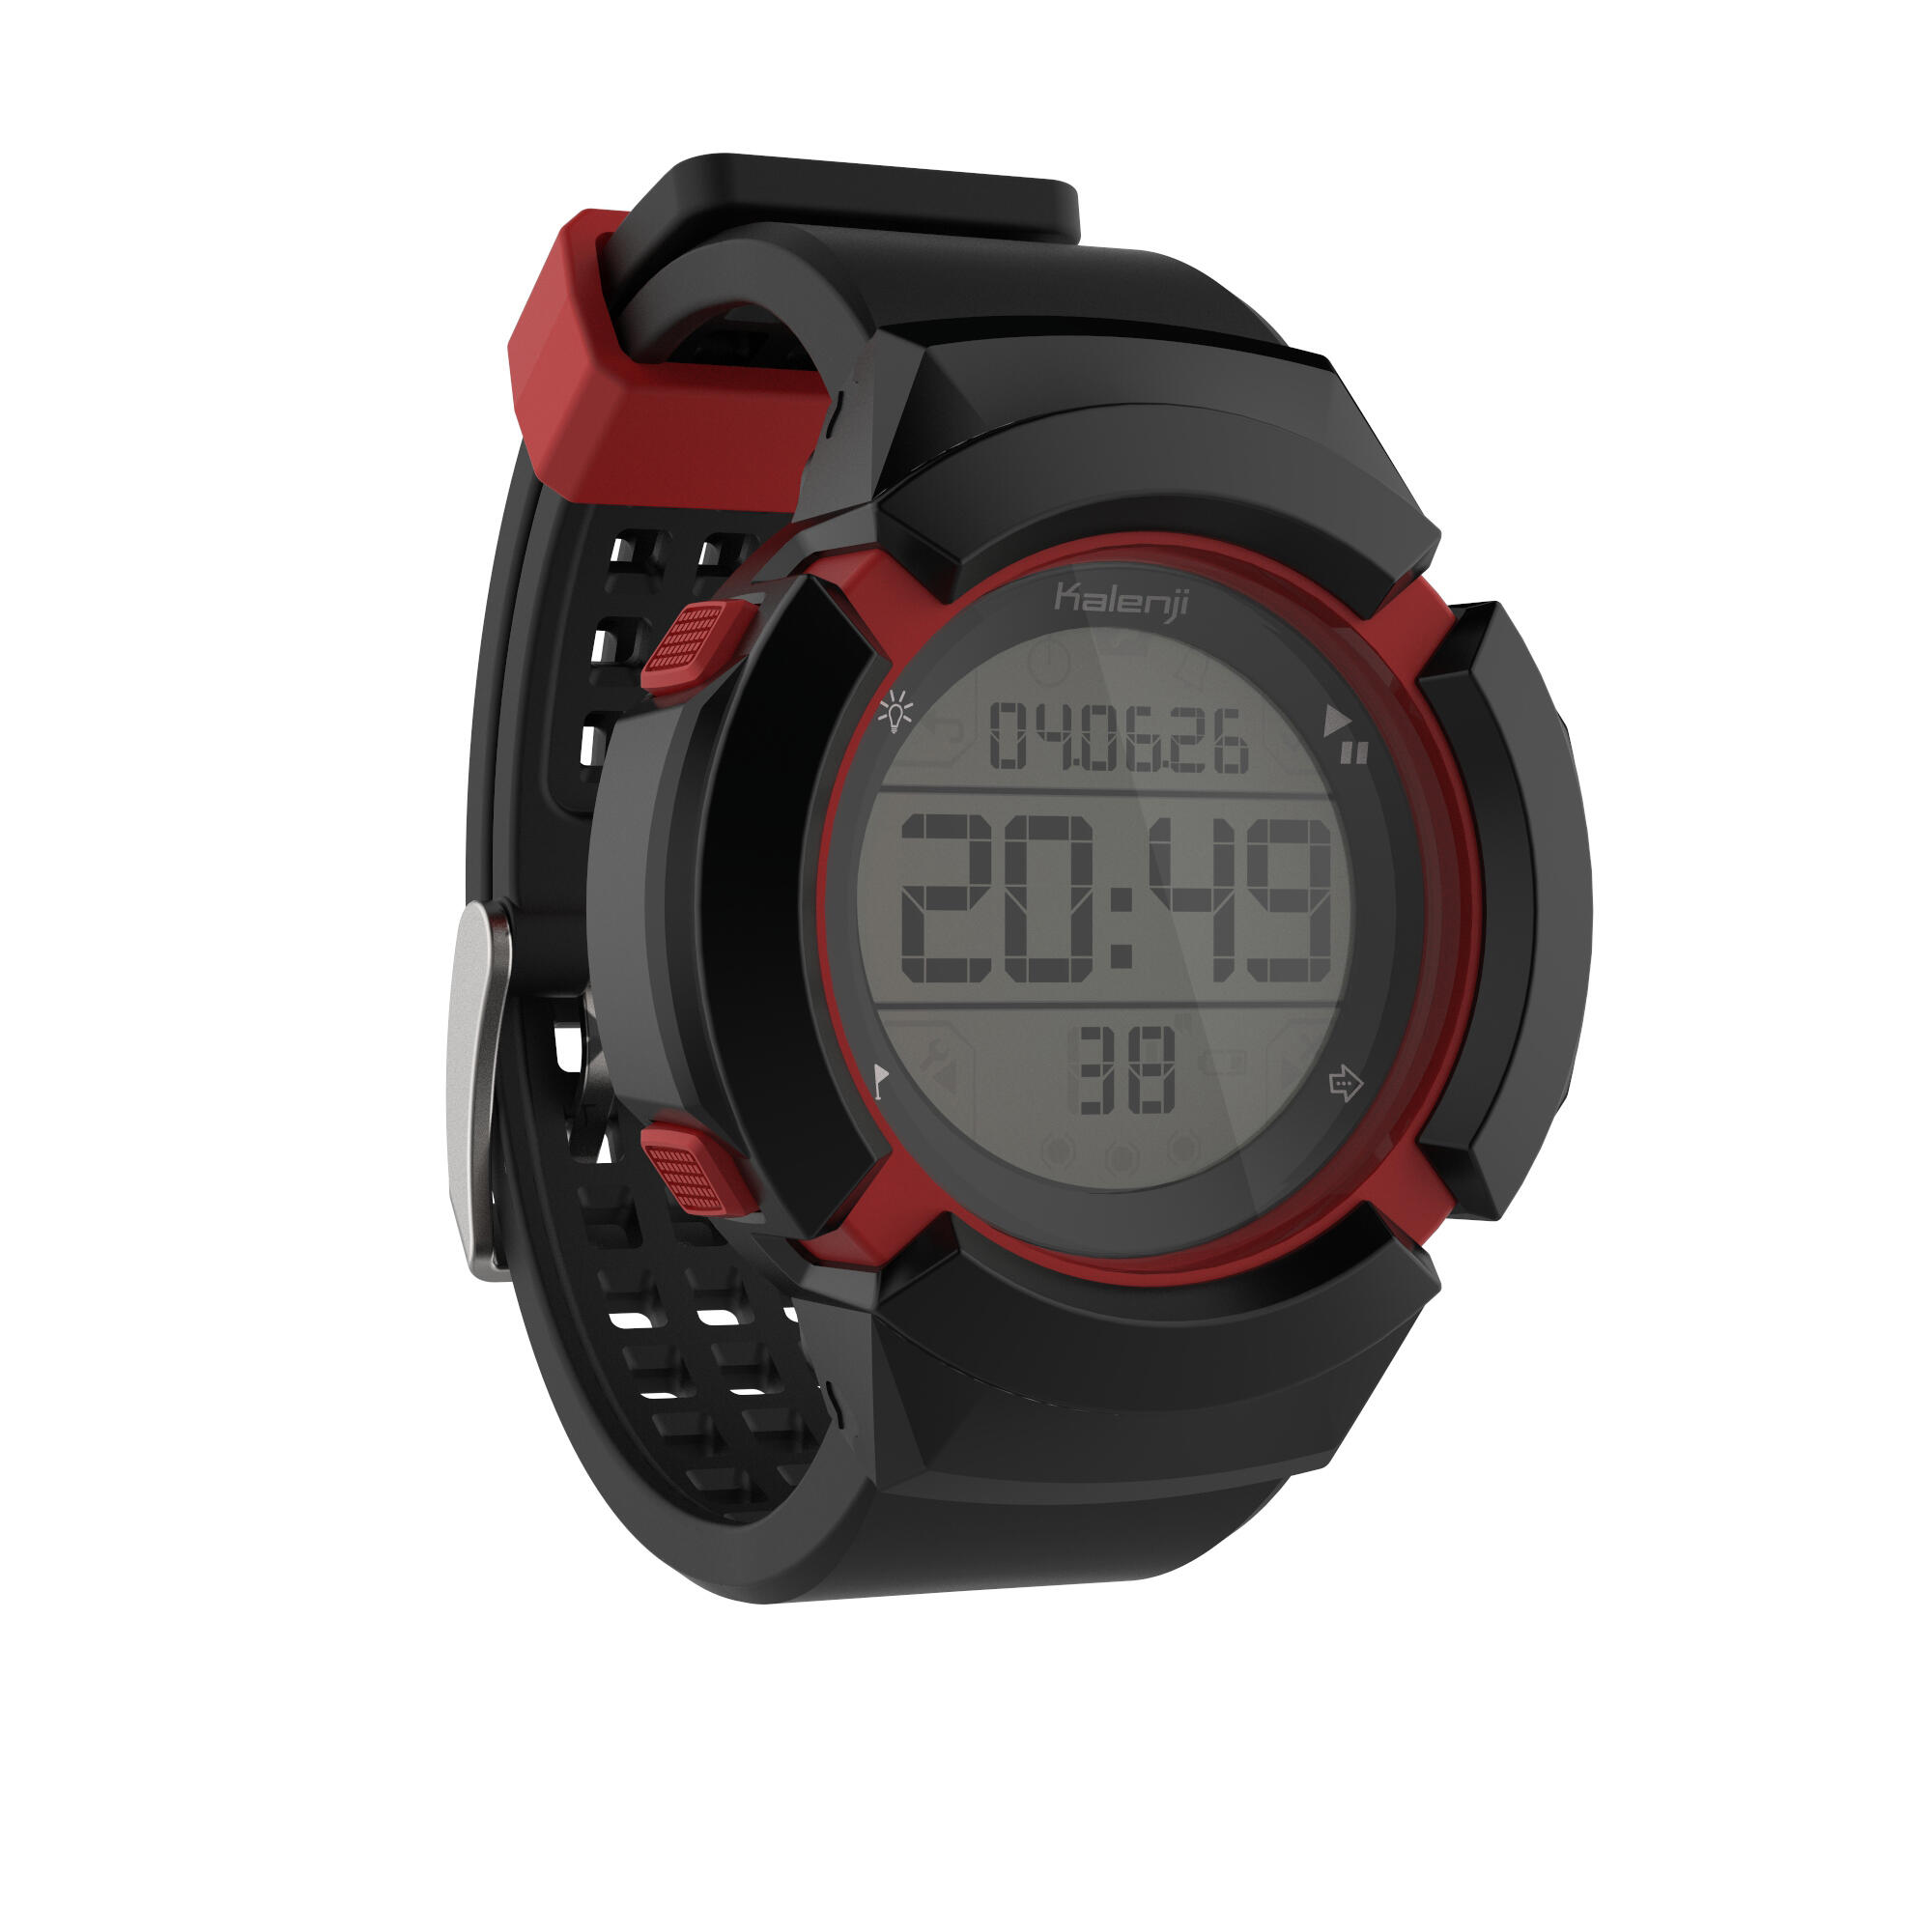 W700xc Men's Running Stopwatch - BLACK 